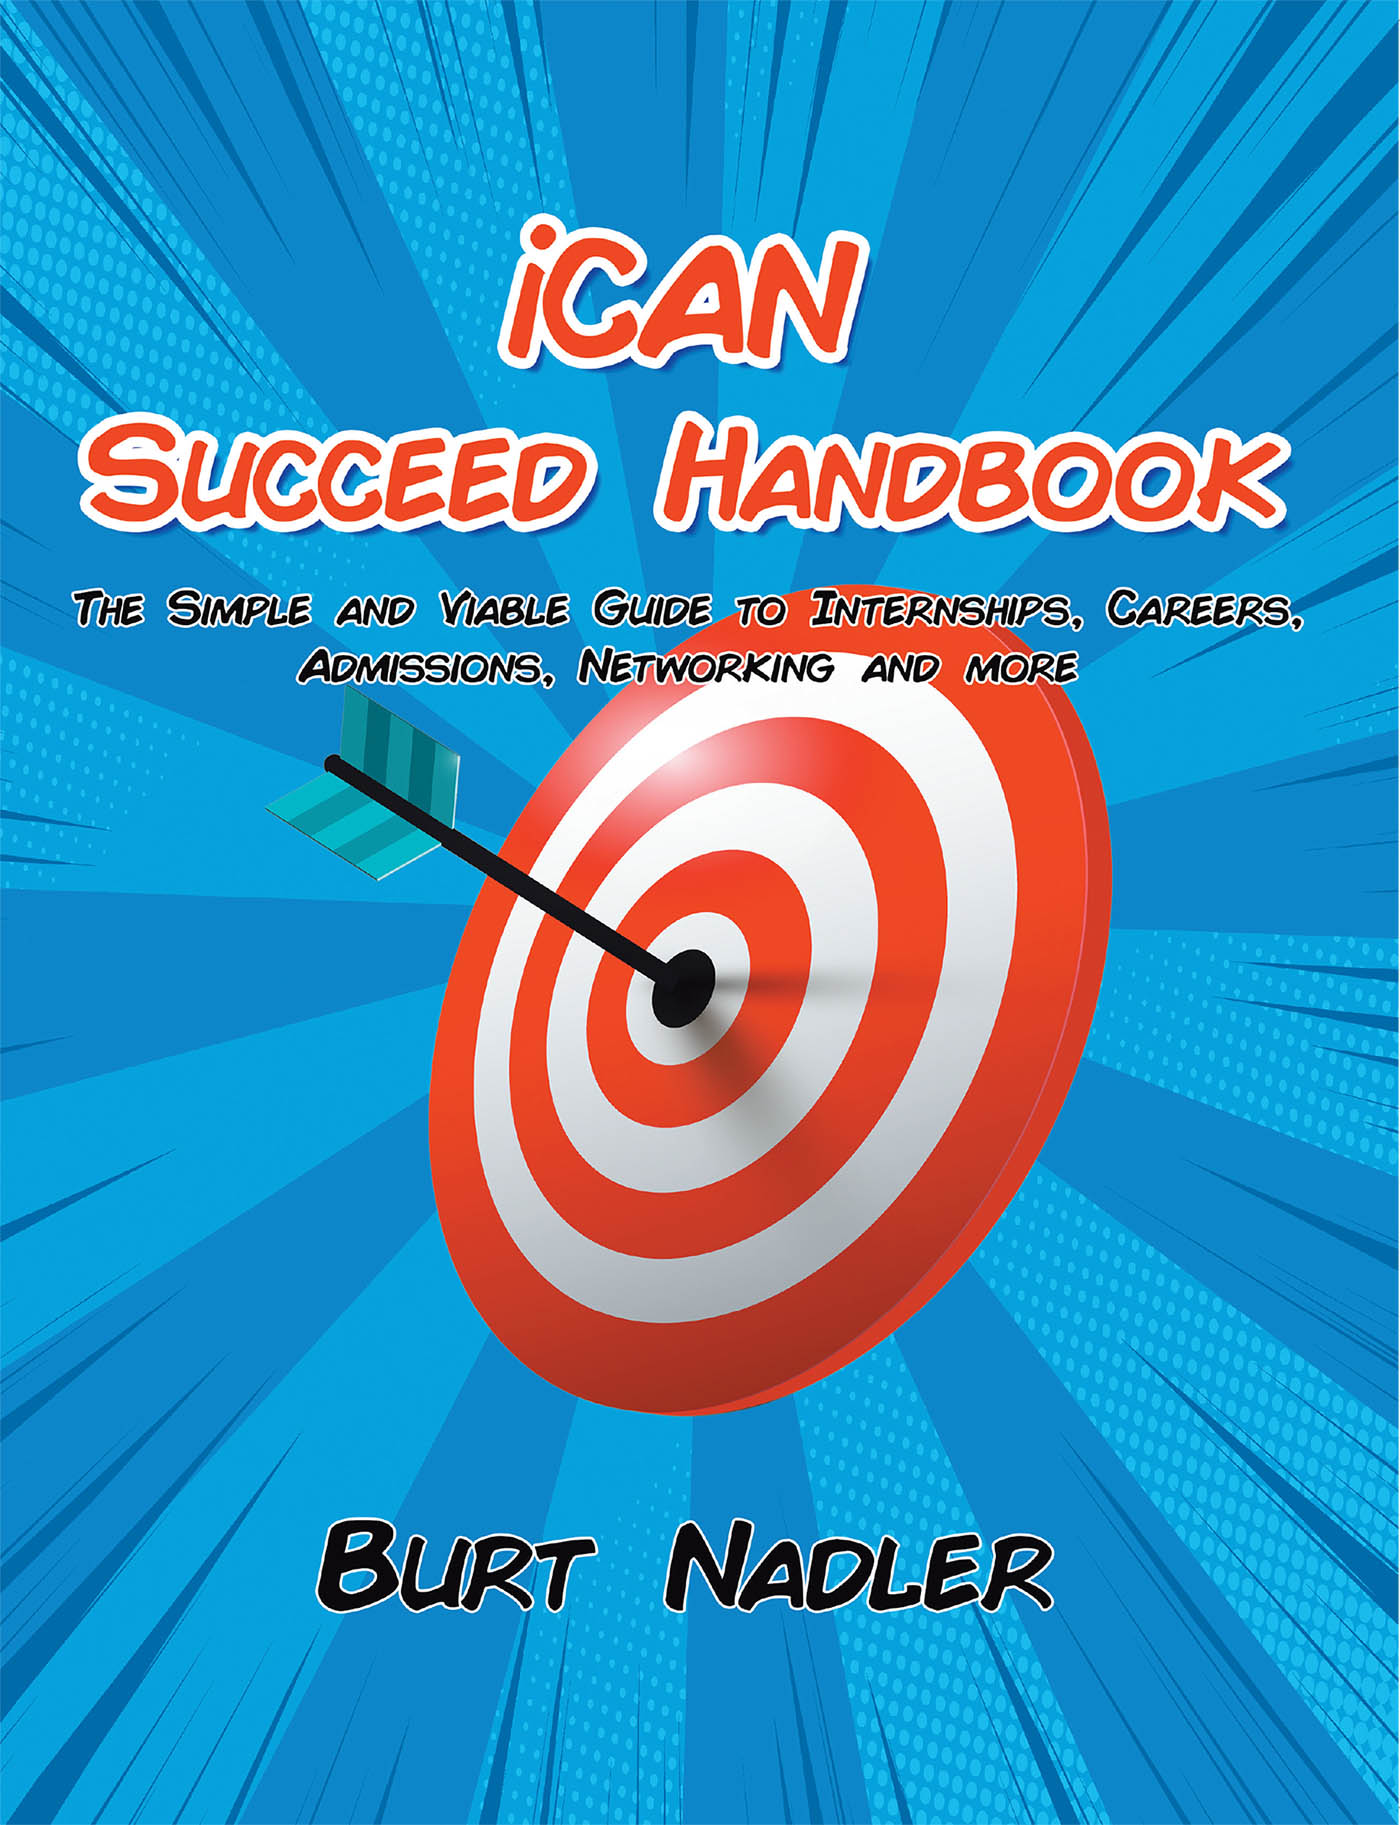 iCAN Succeed Handbook Cover Image